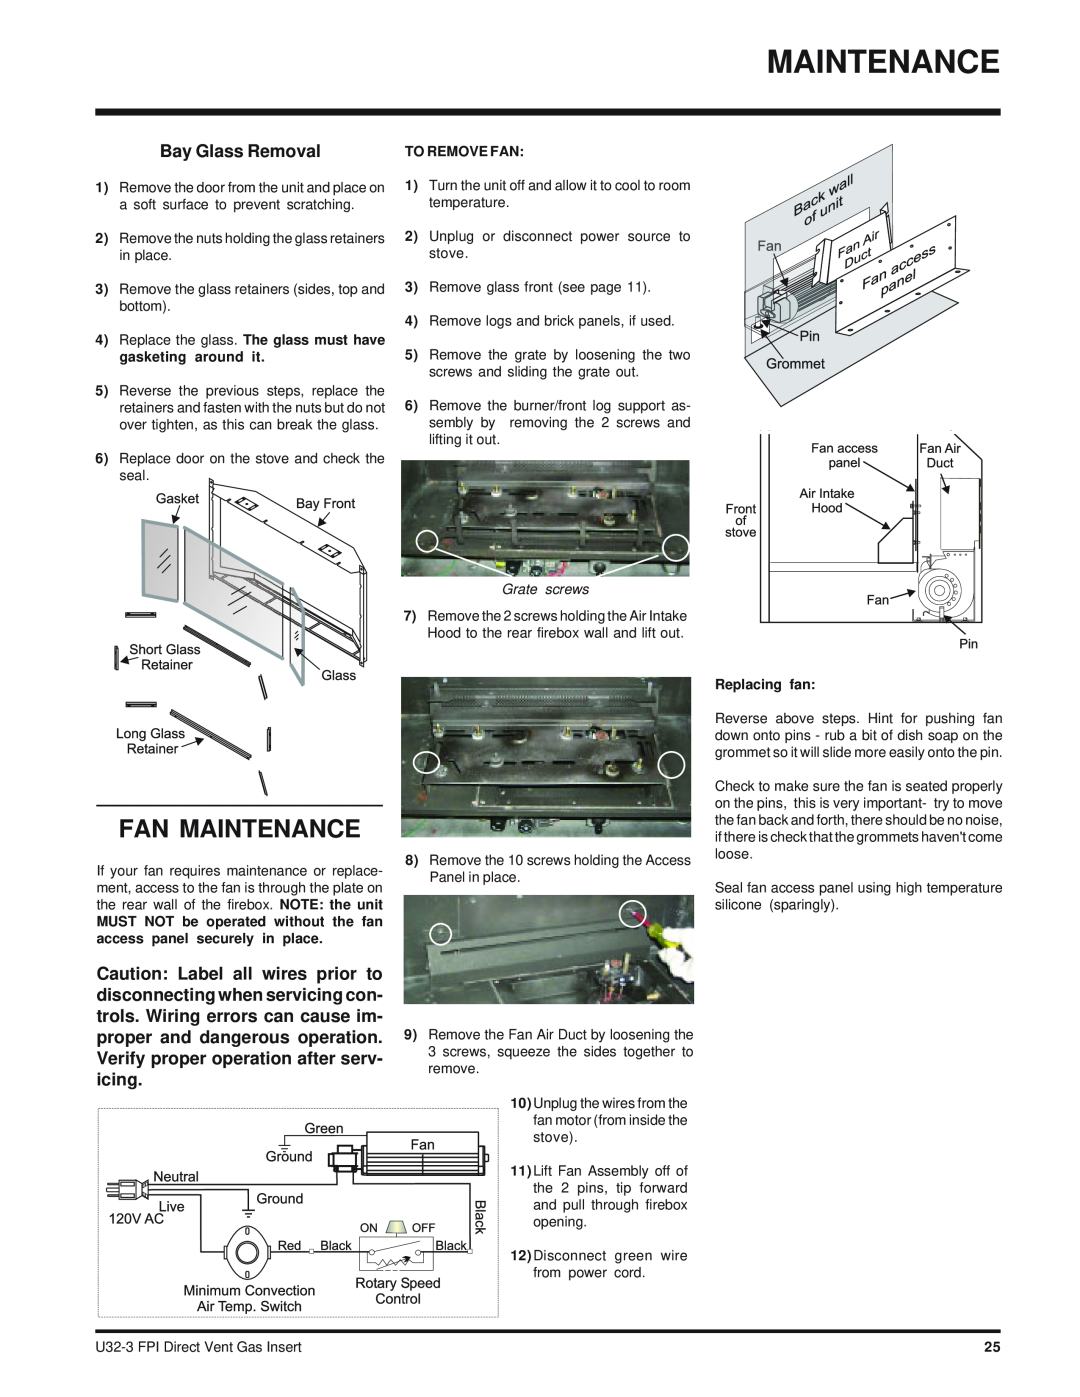 Regency U32-NG3 installation manual Fan Maintenance, Bay Glass Removal 